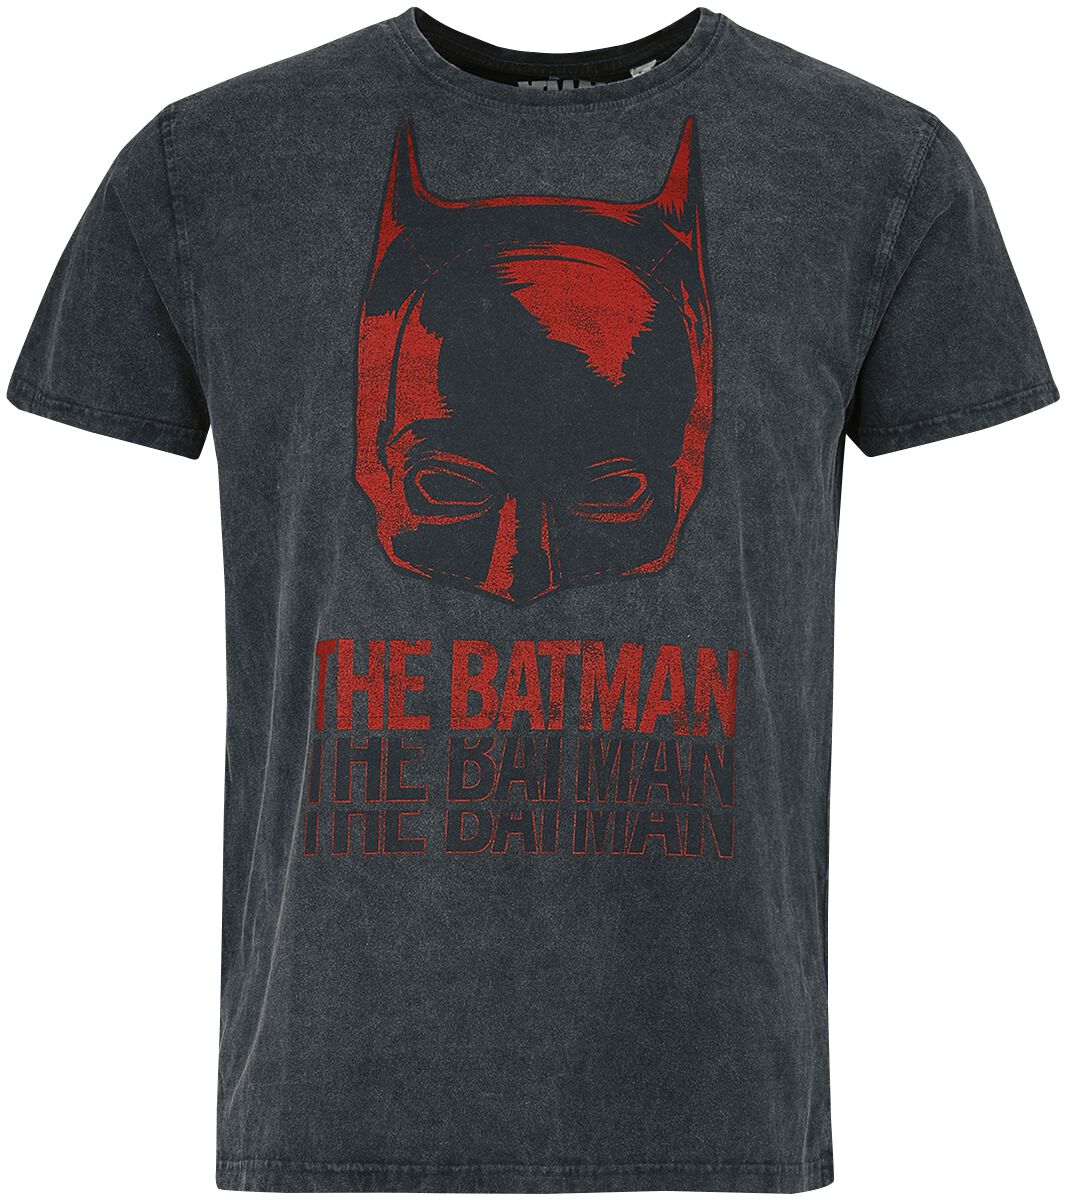 Batman - DC Comics T-Shirt - The Batman - Mask - S bis XXL - für Männer - Größe M - schwarz  - Lizenzierter Fanartikel